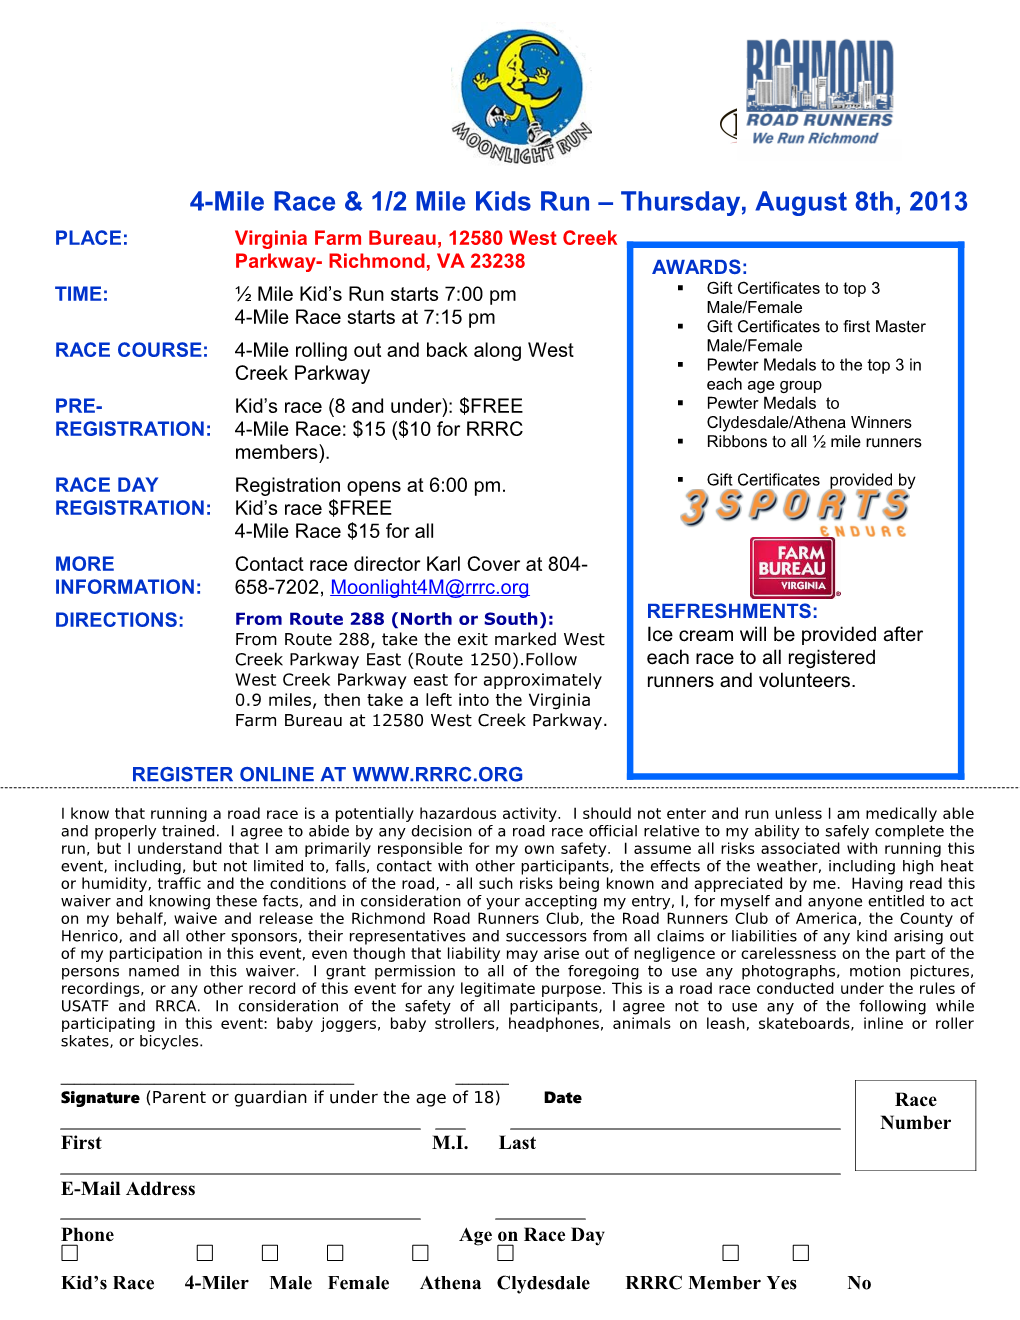 4-Mile Race & 1/2 Mile Kids Run Thursday, August 8Th, 2013